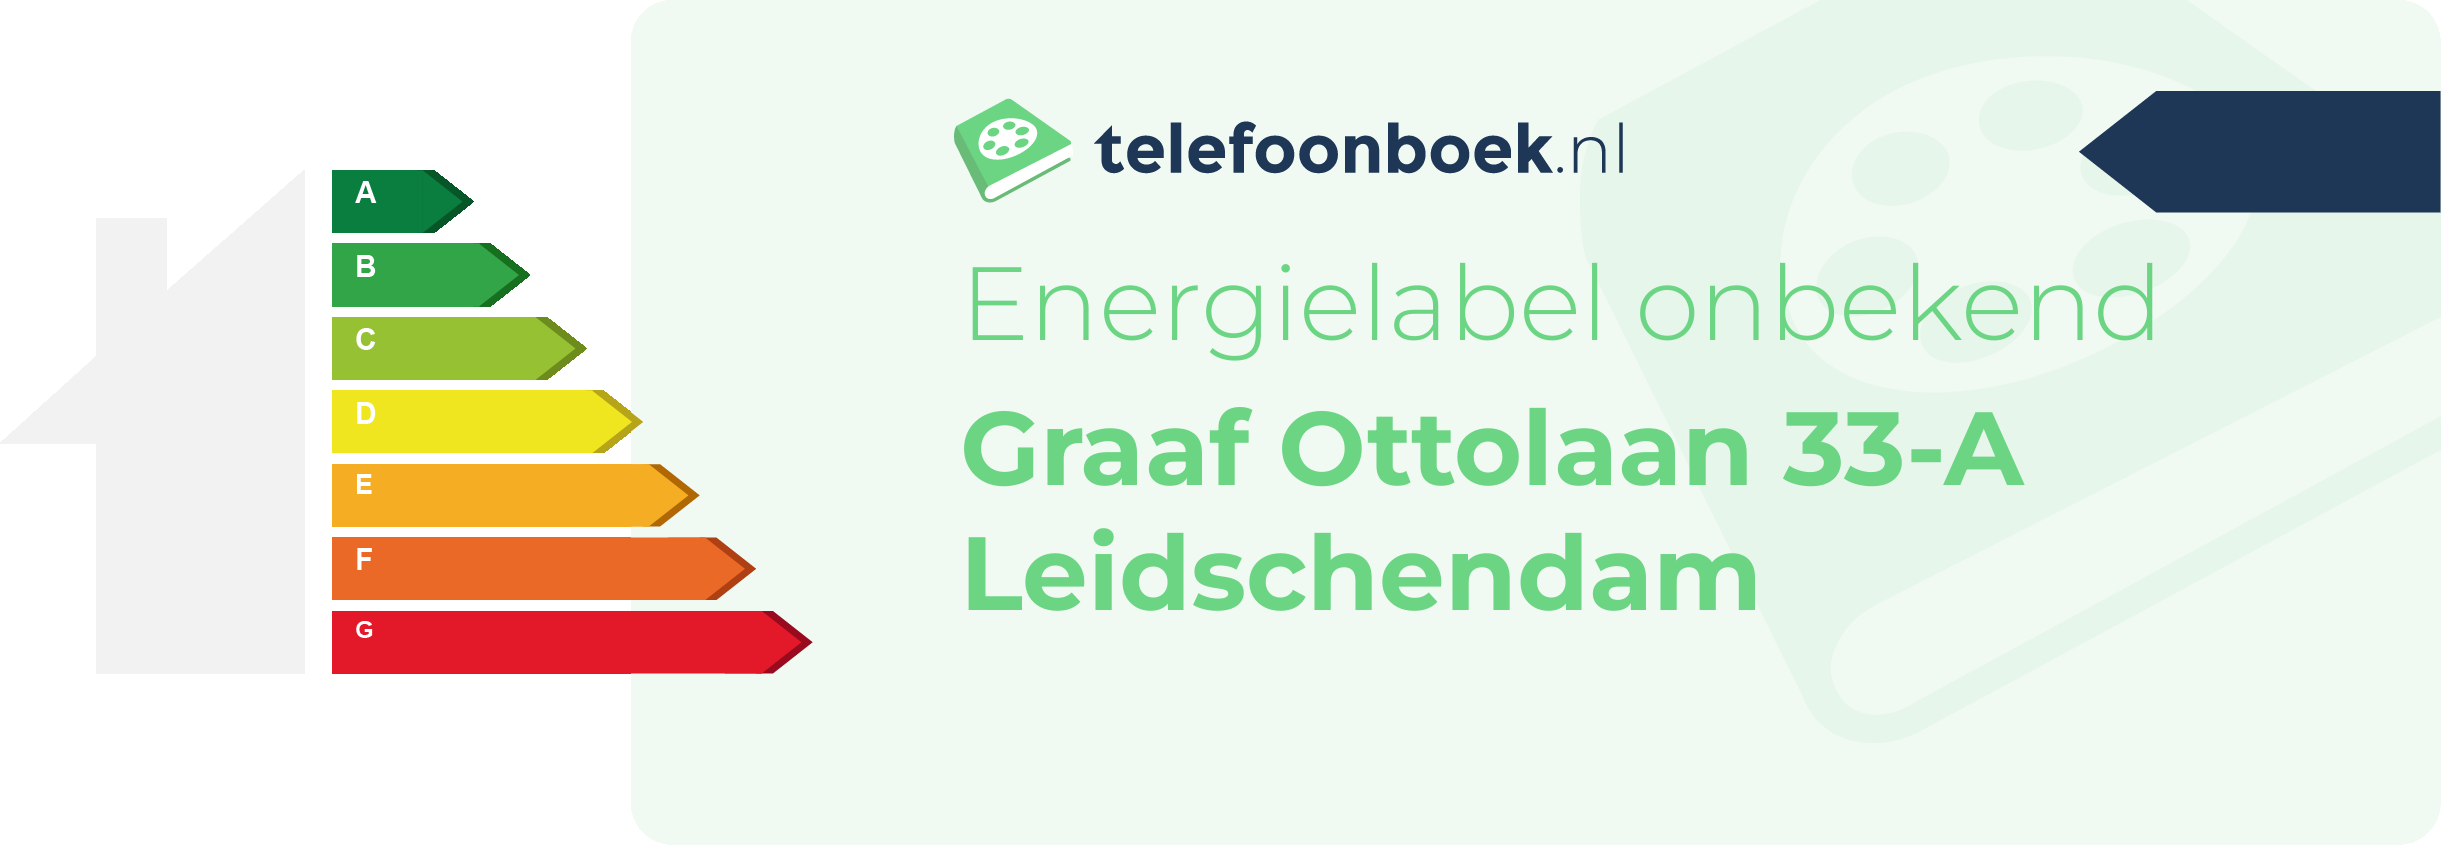 Energielabel Graaf Ottolaan 33-A Leidschendam